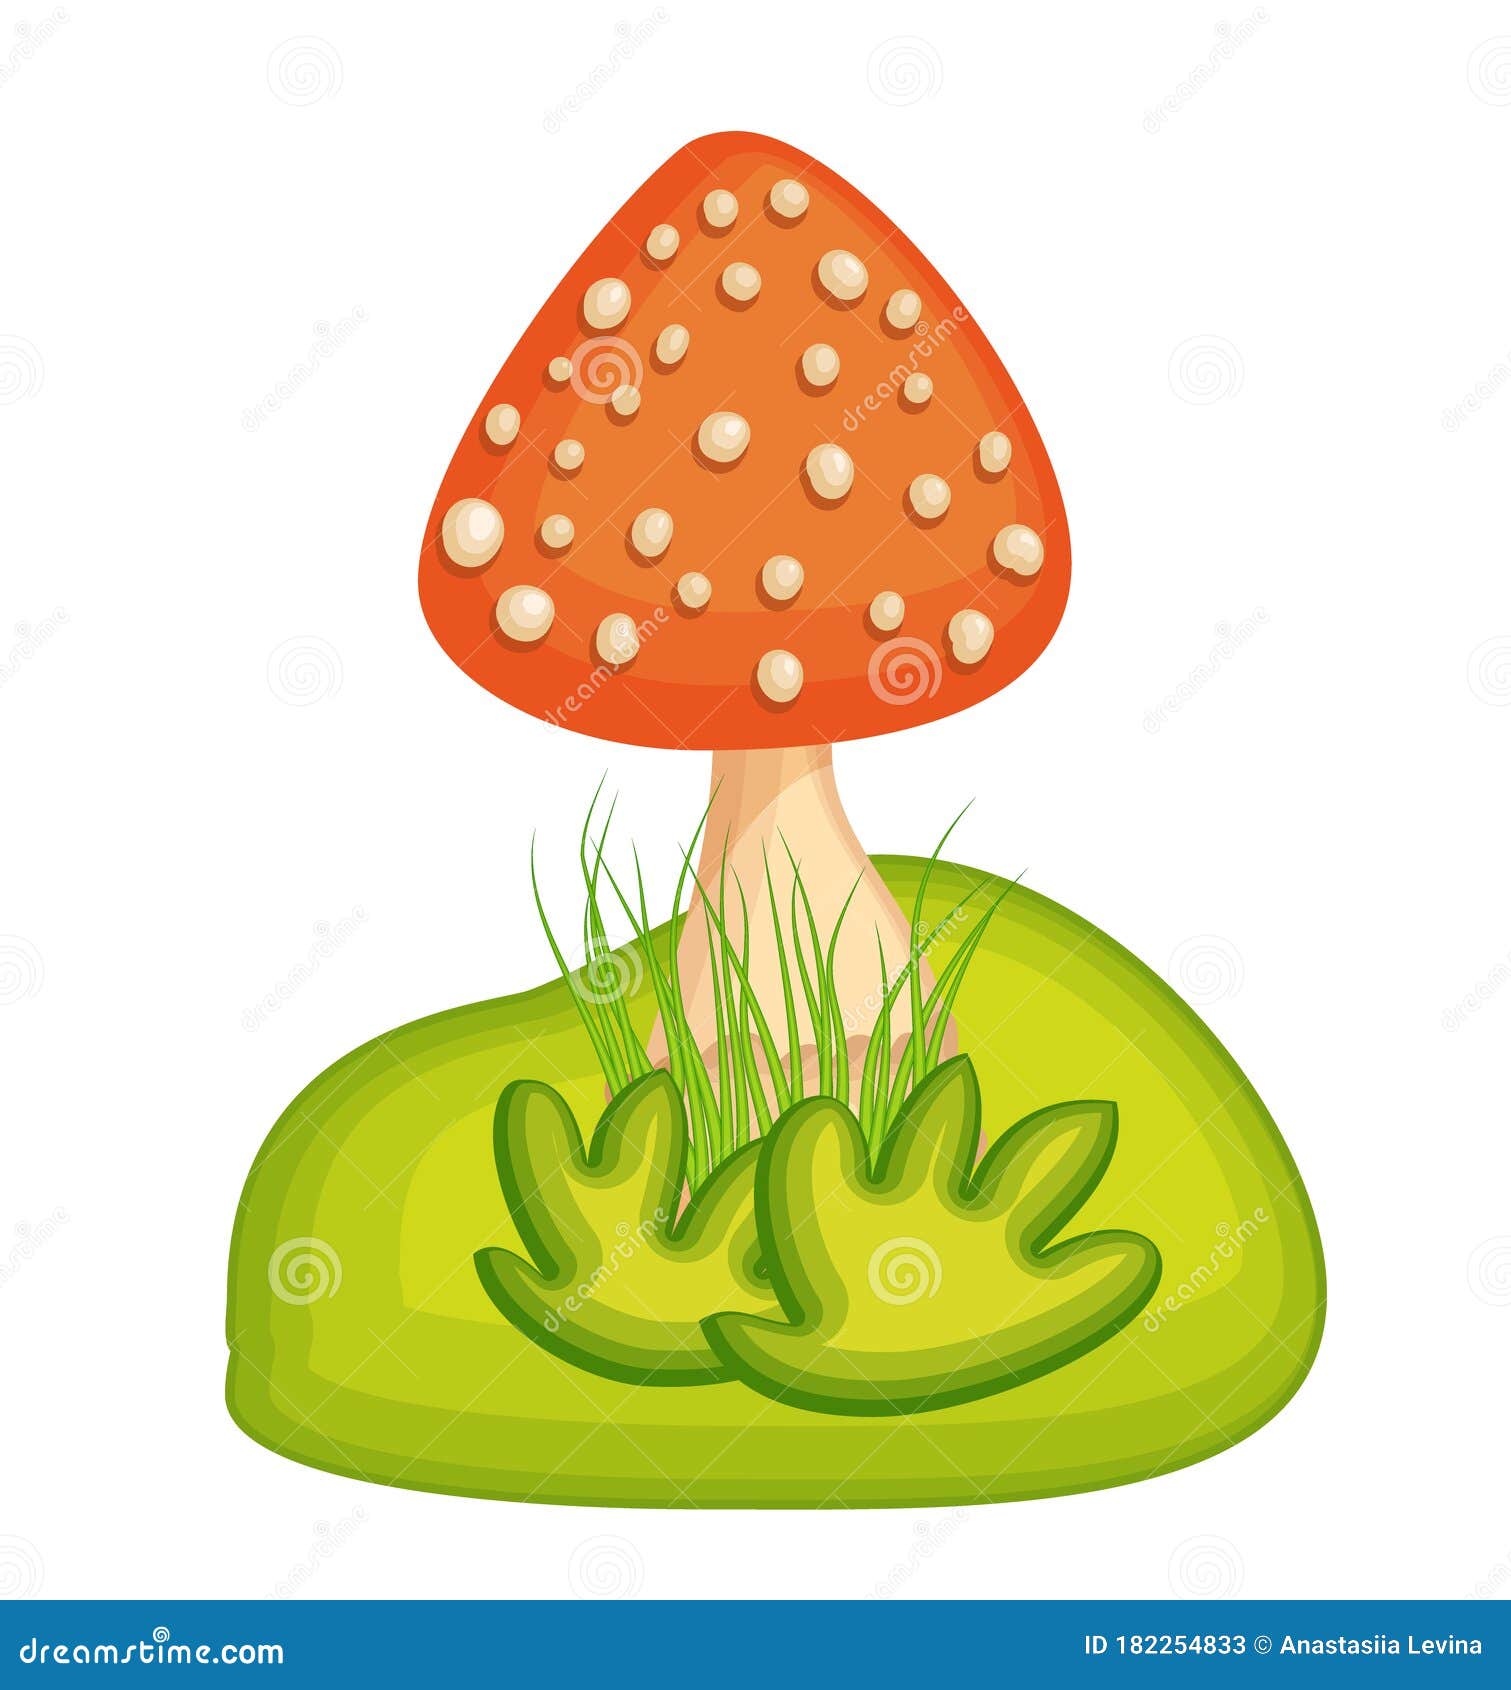 Casa de cogumelos e algum estilo de desenho animado de grama no fundo  branco